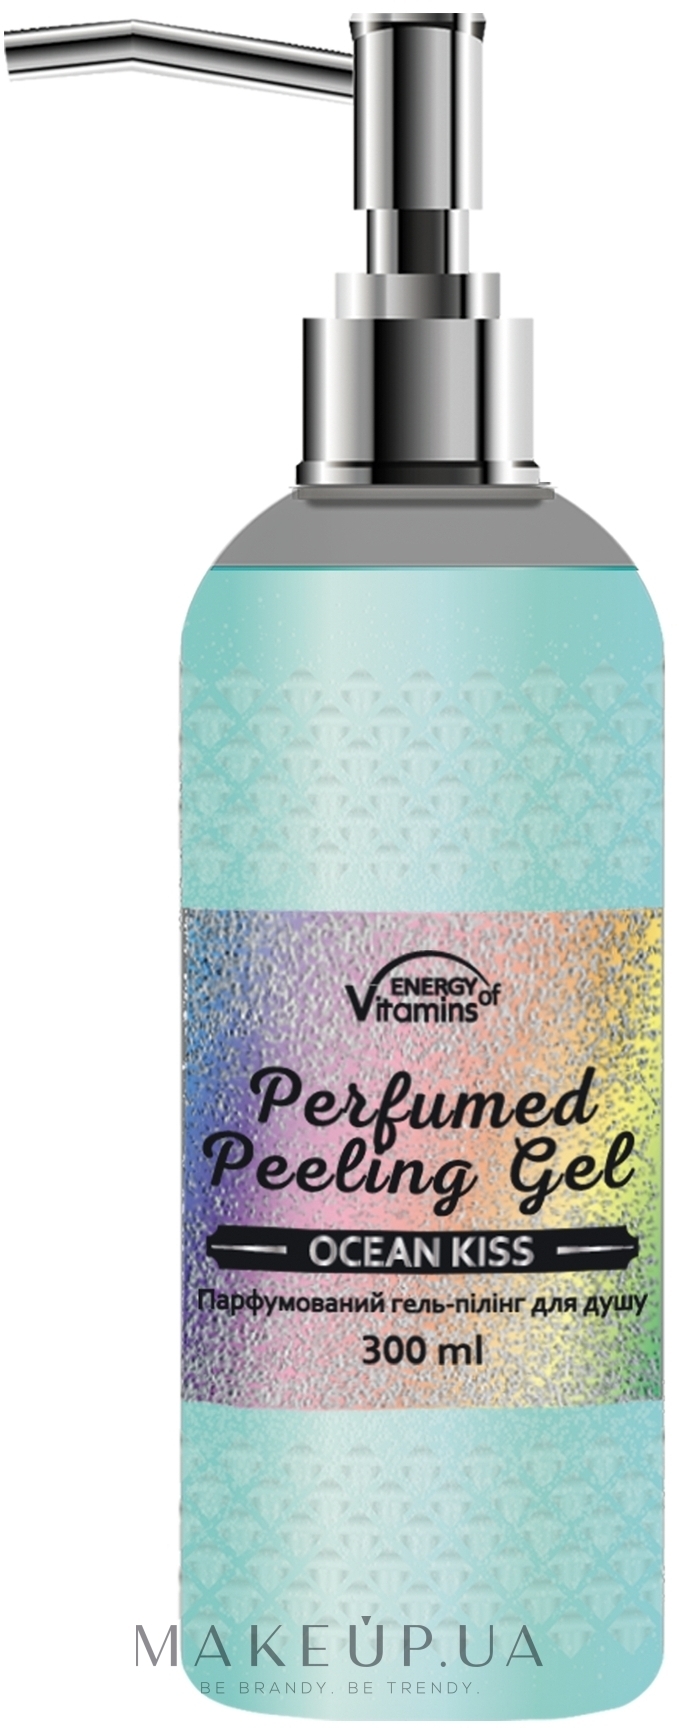 Парфумований гель-пілінг для душу - Energy of Vitamins Perfumed Peeling Gel Ocean Kiss — фото 300ml